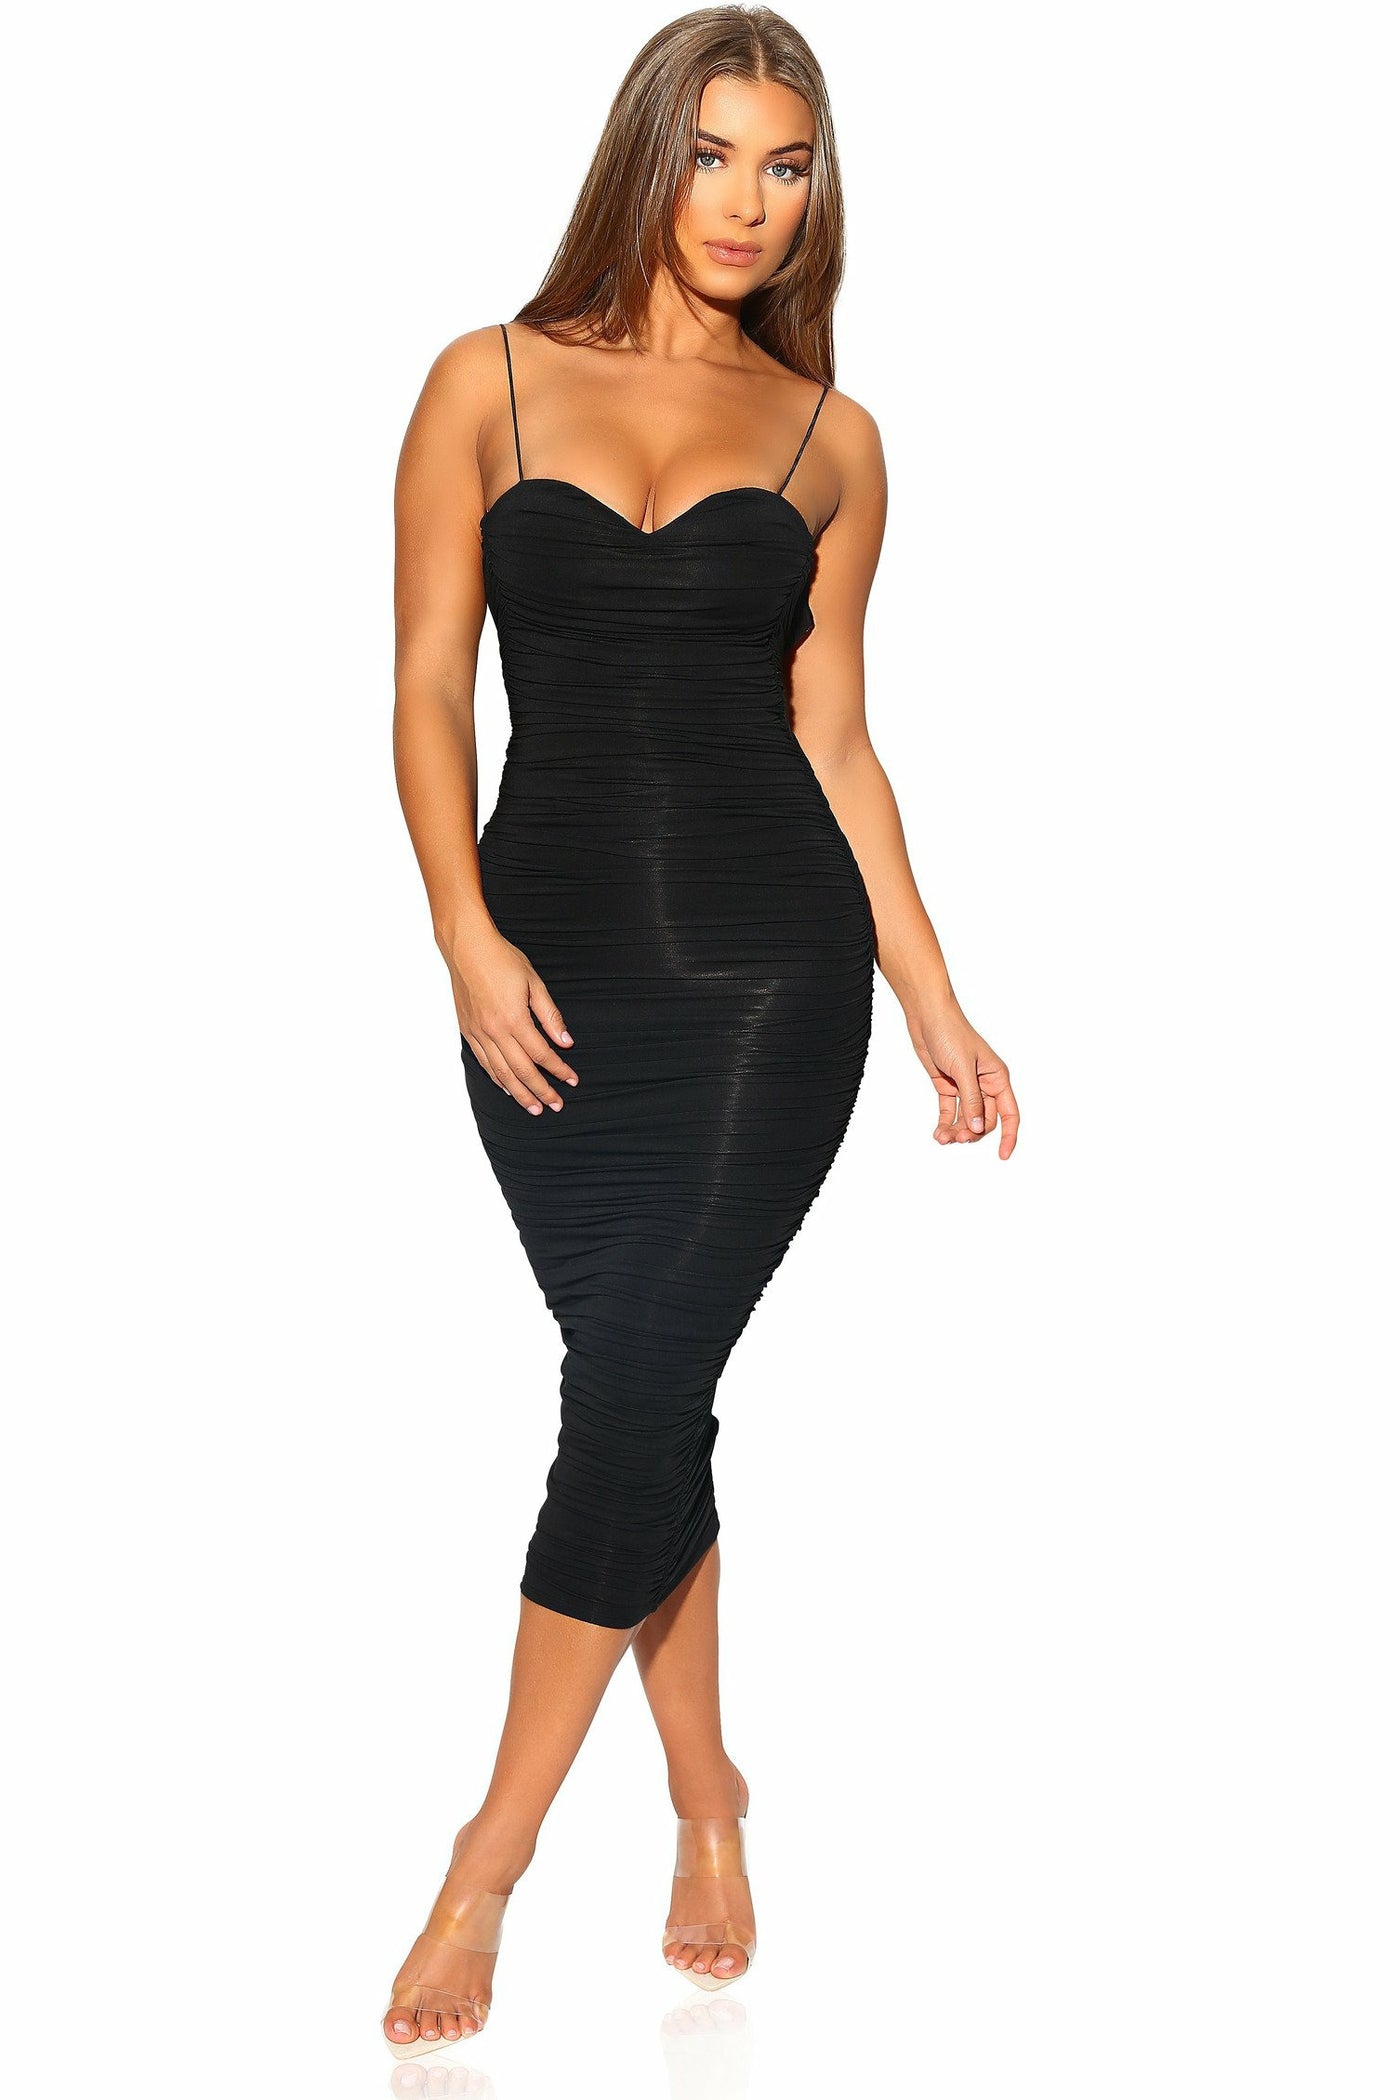 "KARINA" RUCHED DRESS - BLACK - TOXIC ENVY BOUTIQUE 